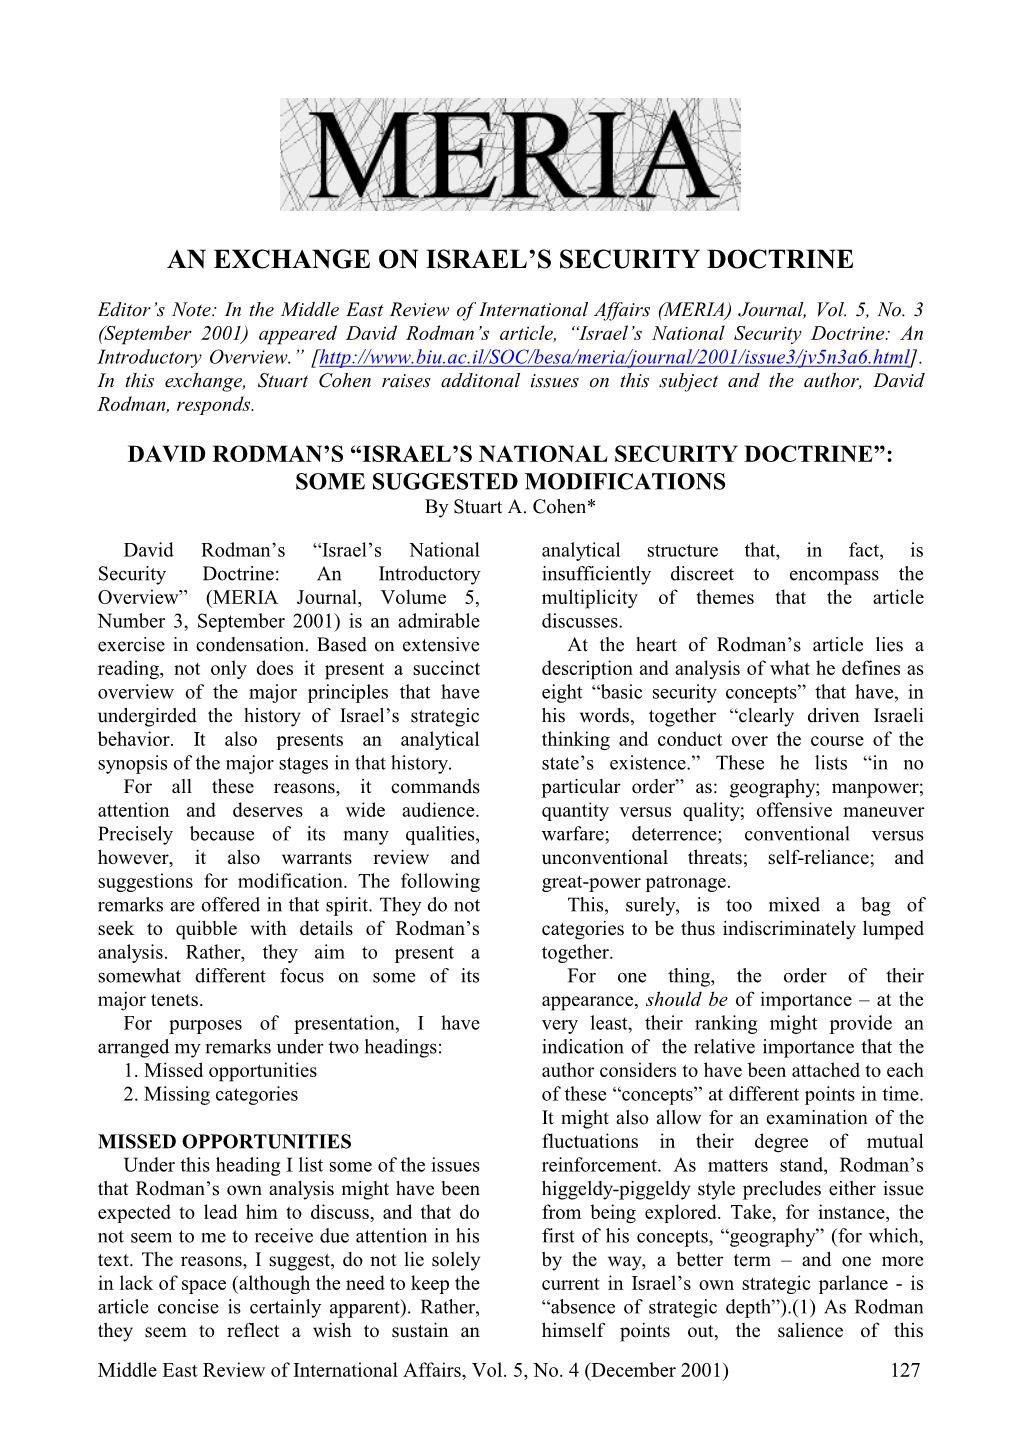 David Rodman's “Israel's National Security Doctrine”